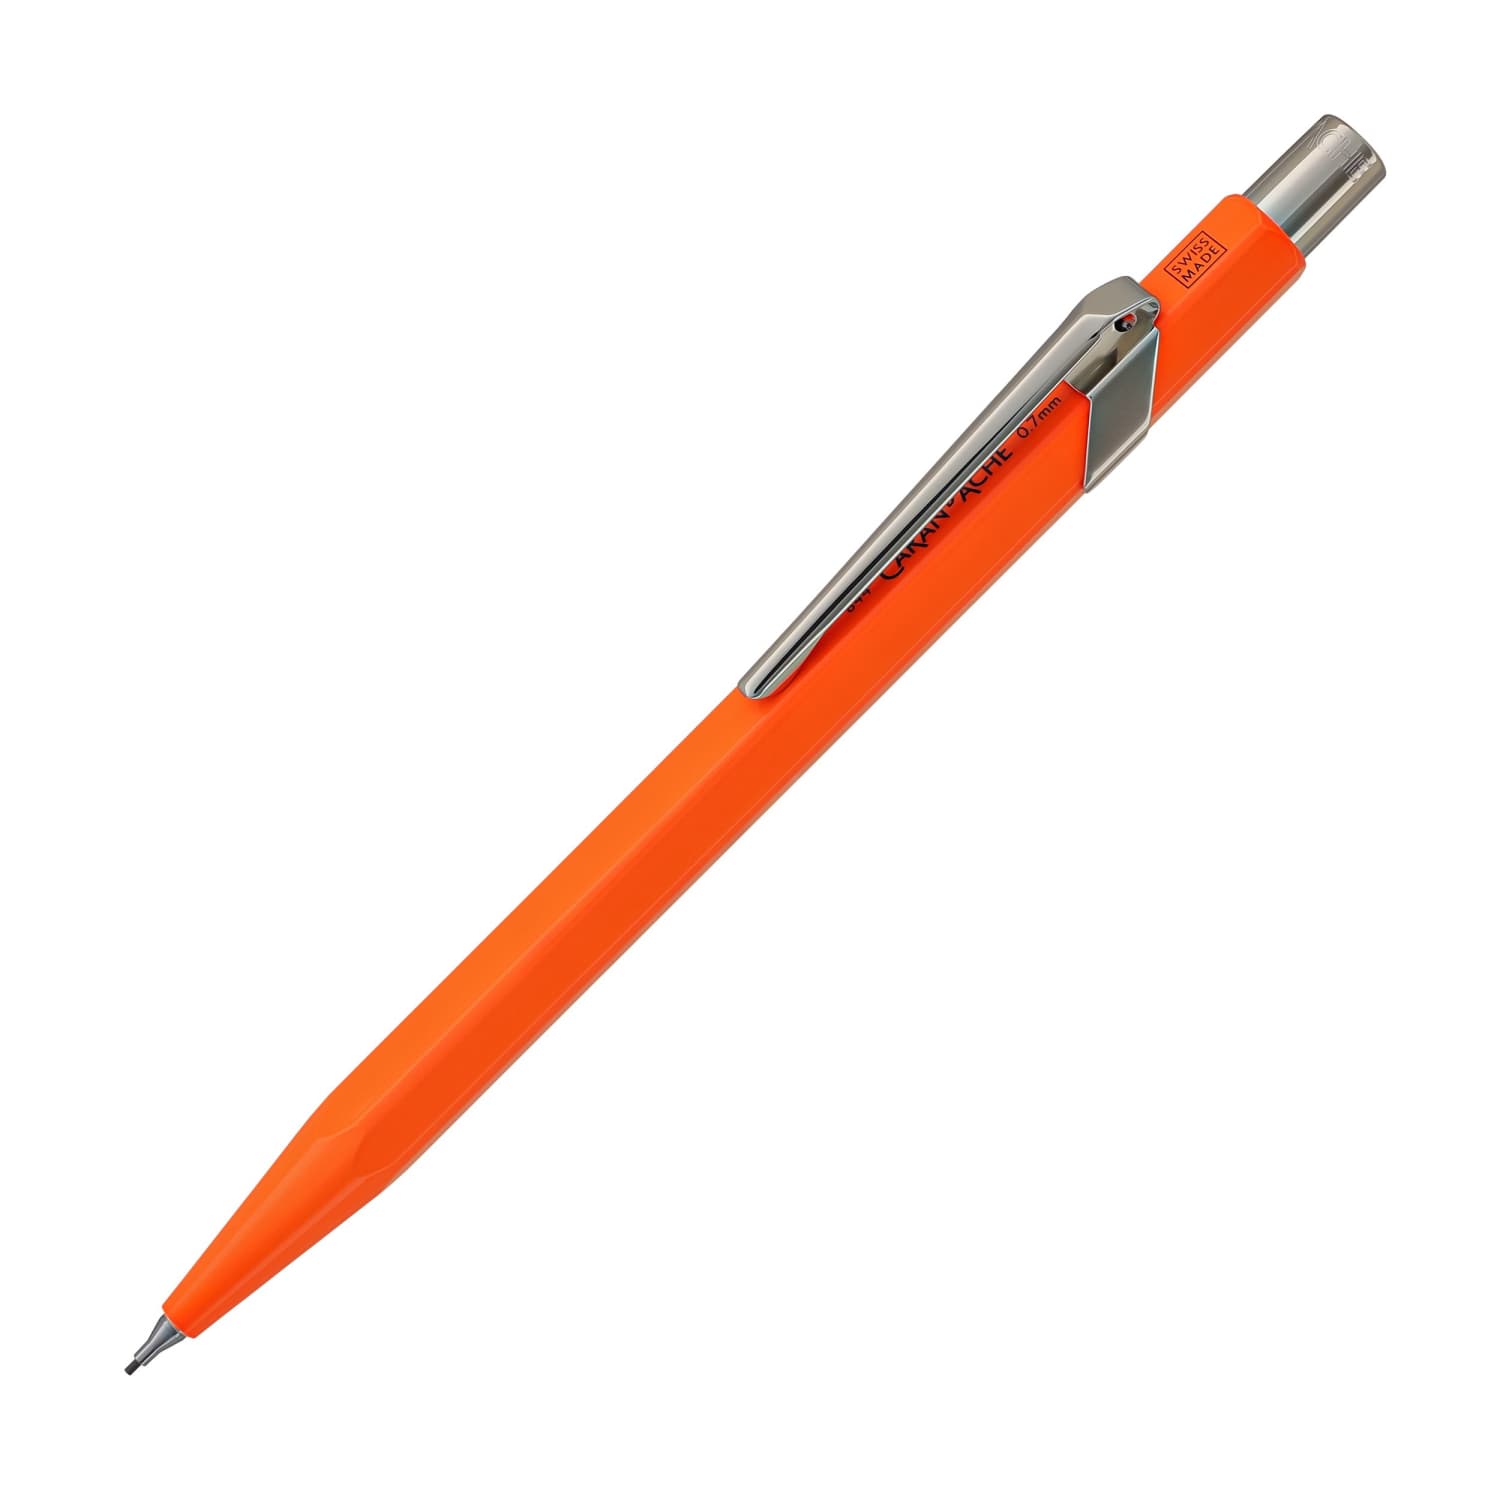 Caran d'Ache pencil sharpener steel